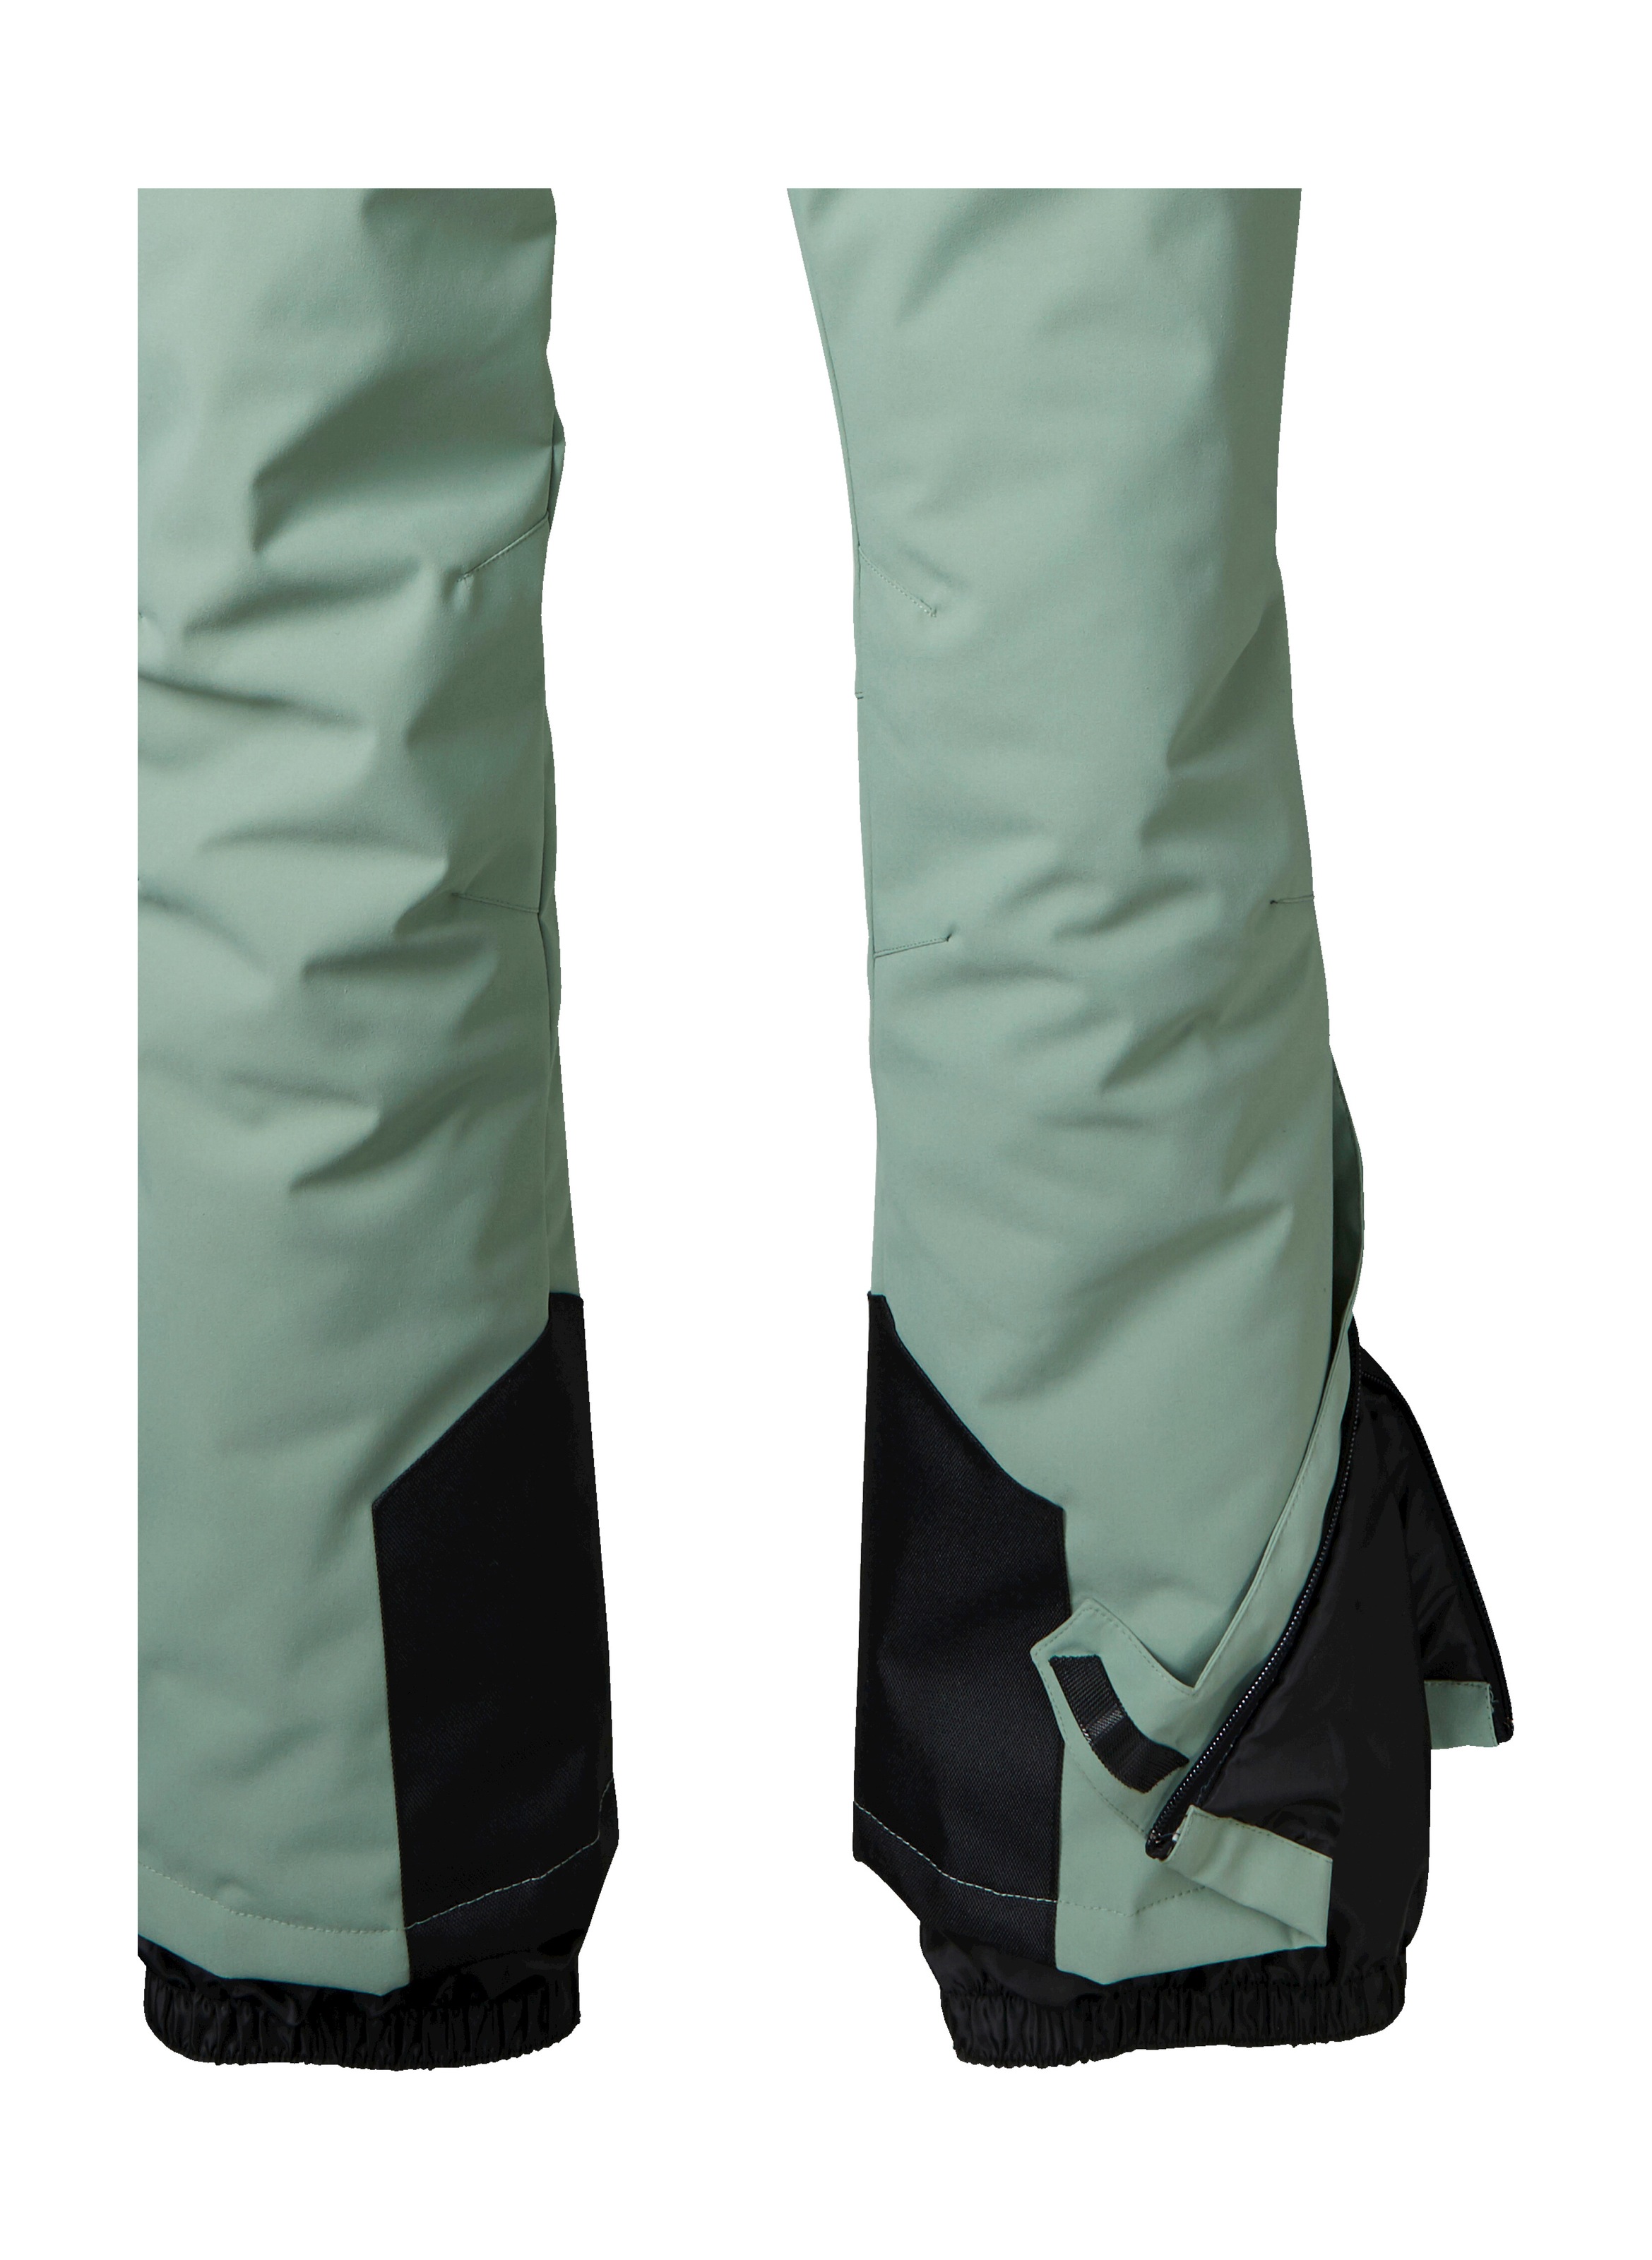 KSW 249 SKI PNTS - Damen Skihose  mit abnehmbaren Trägern - Grün